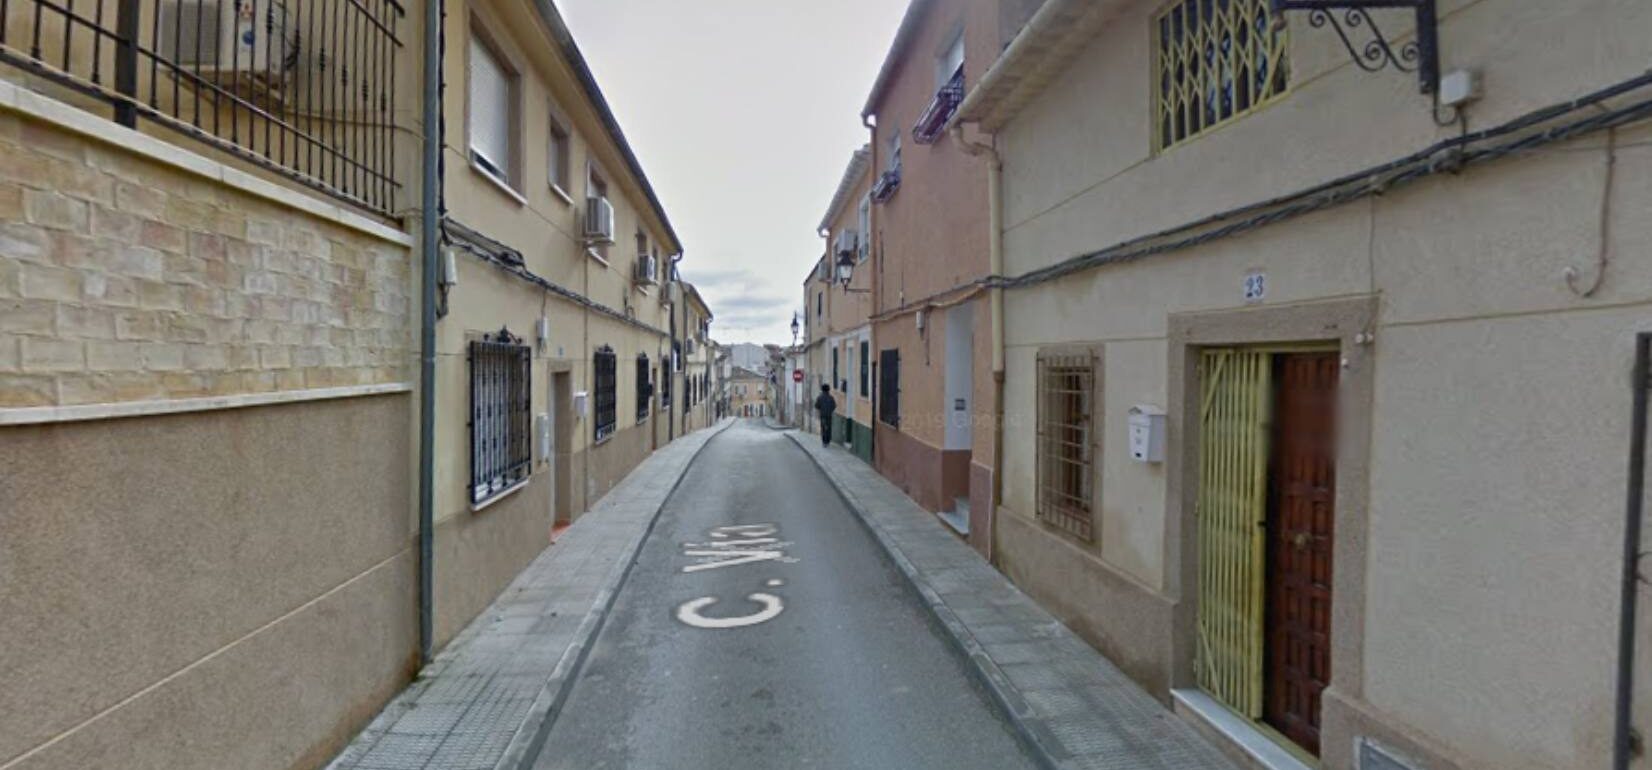 Calle Vía, en Hellín, Albacete. Imagen de Google Maps.